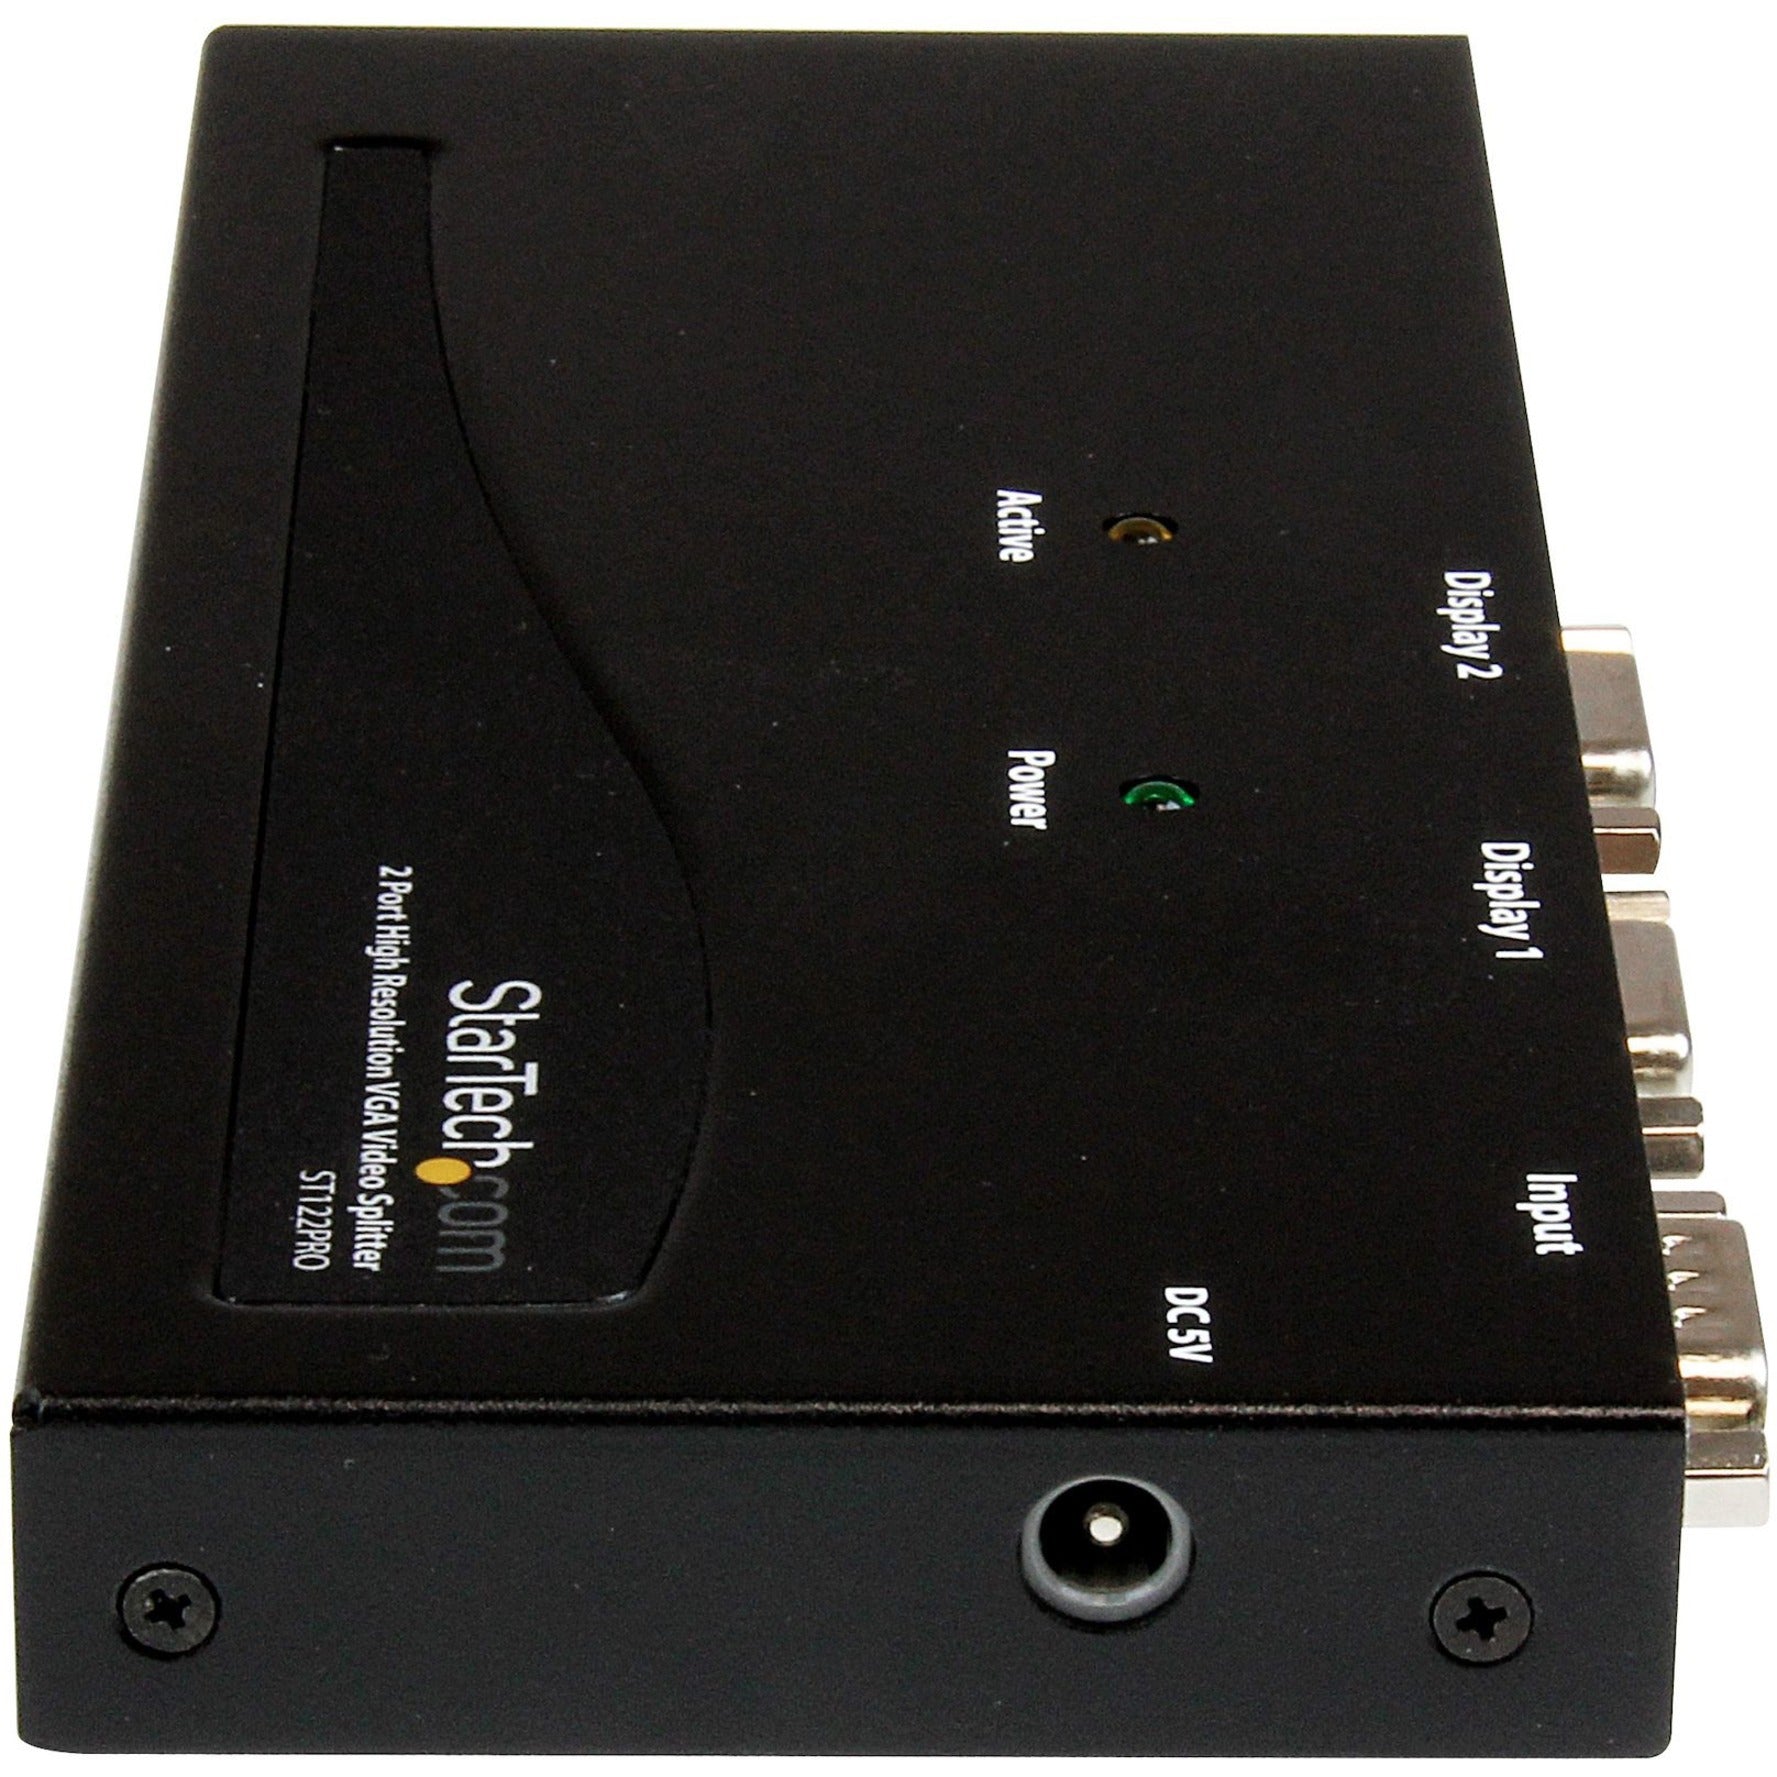 StarTech.com ST122PRO 2 Port High Resolution VGA Video Splitter - 350 MHz, Simultaneous Displays on 2 Monitors